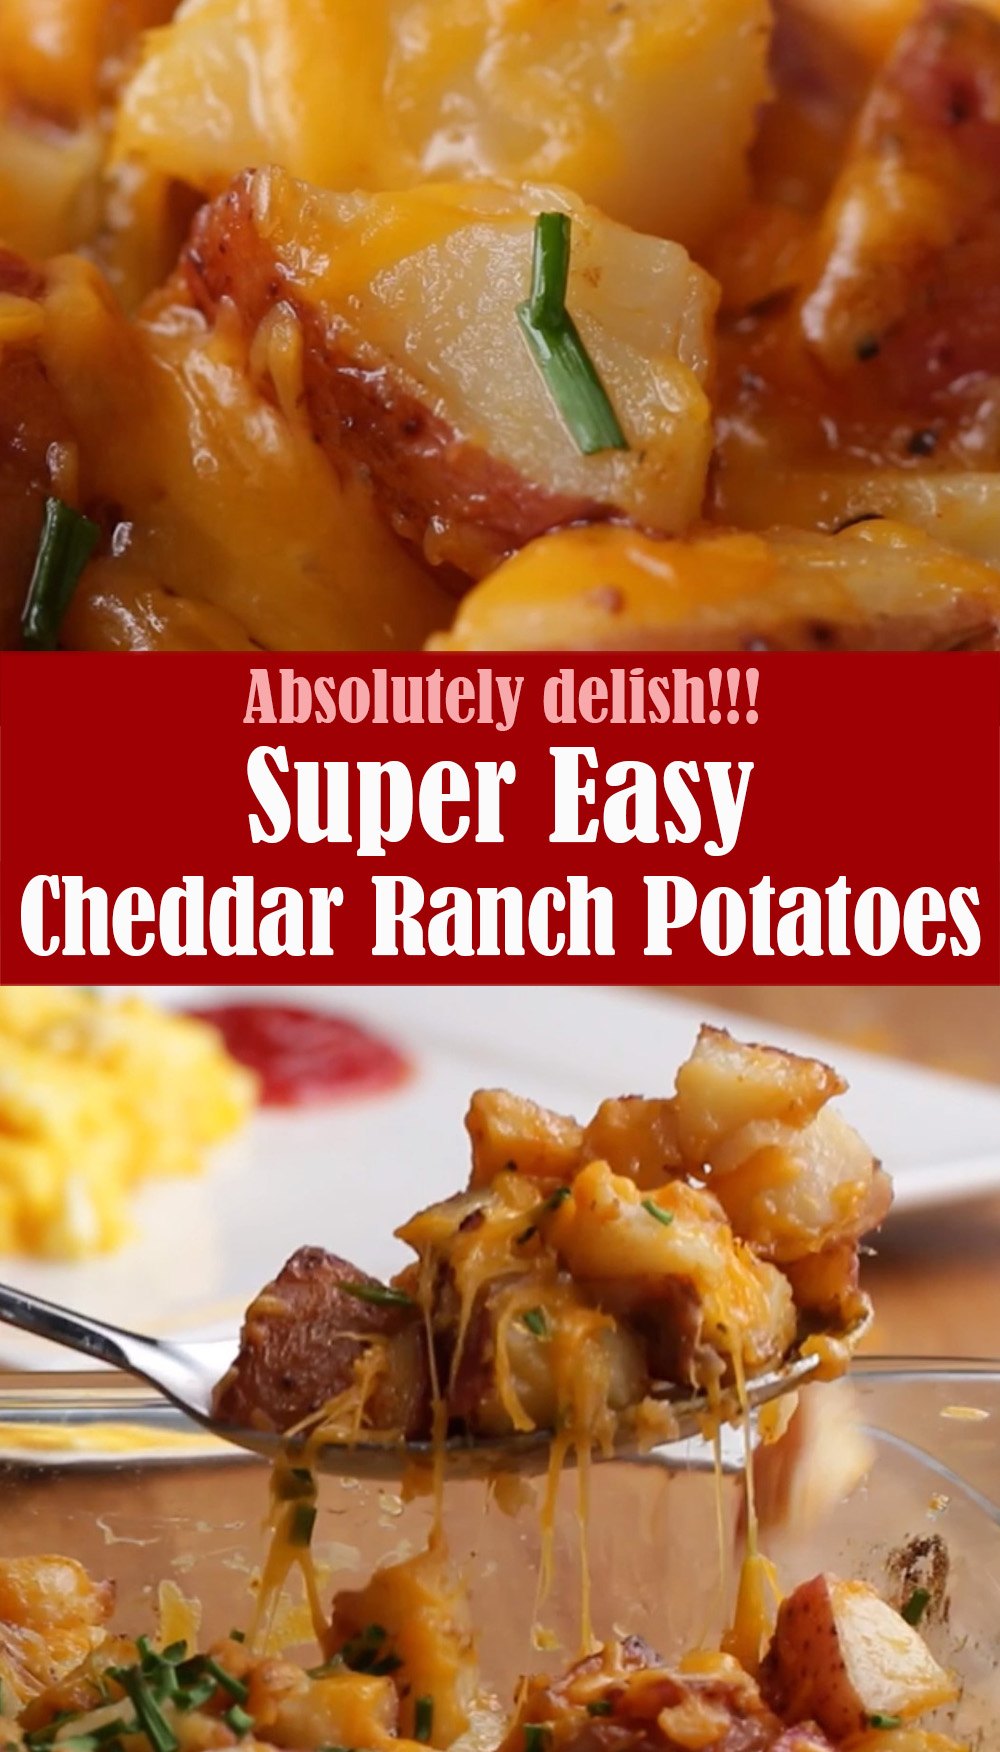 Super Easy Cheddar Ranch Potatoes